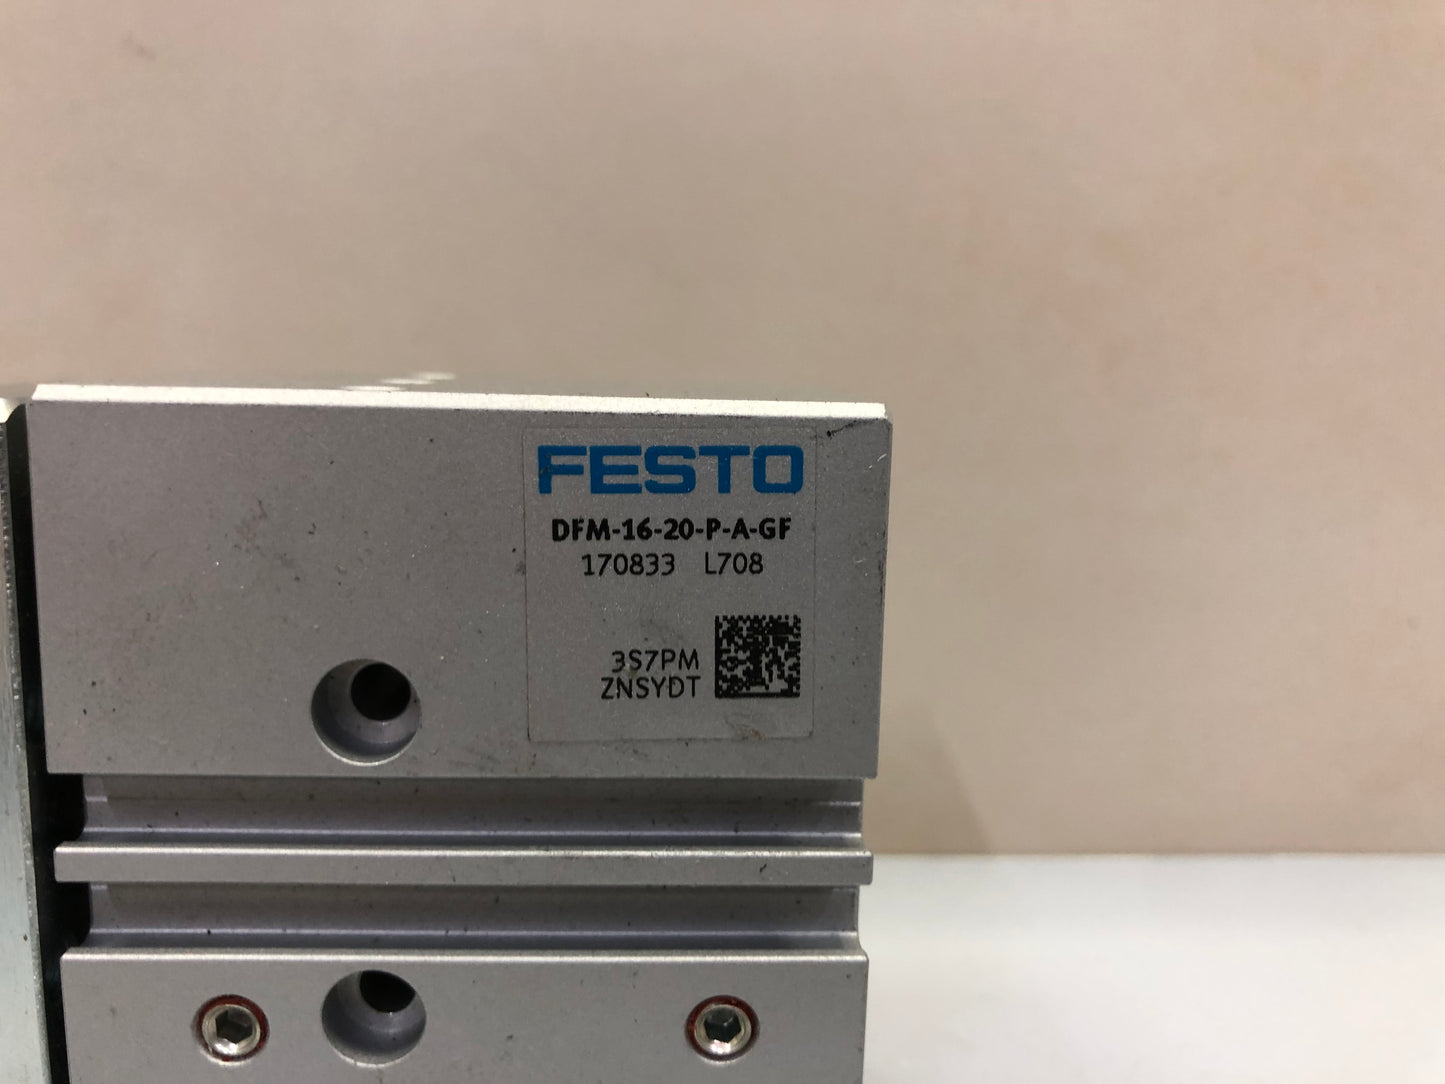 FESTO DFM-16-20-P-A-GF 170833 Guided Actuator